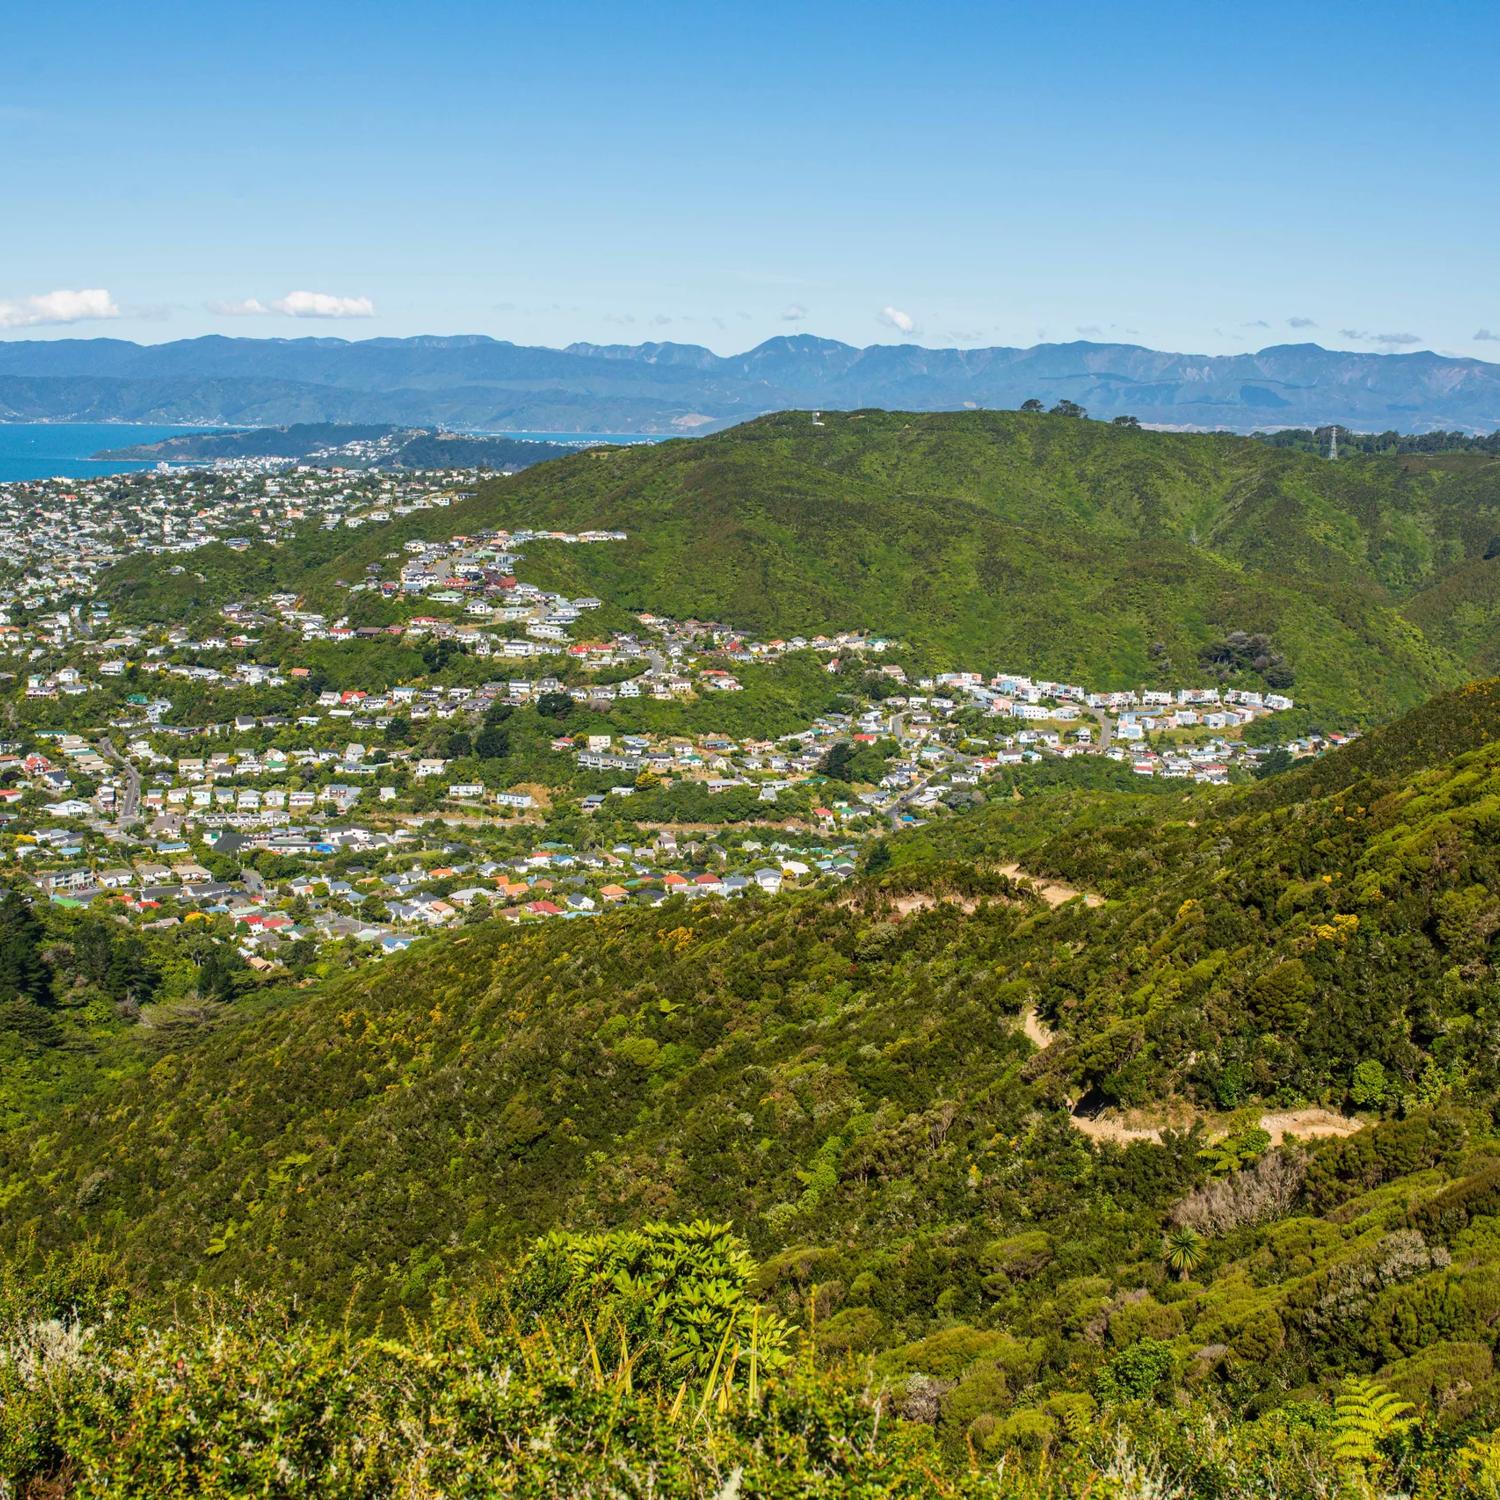 Looking over Karori from Mākara Peak Mountain Bike Park, with the Wellington harbour in the distance.